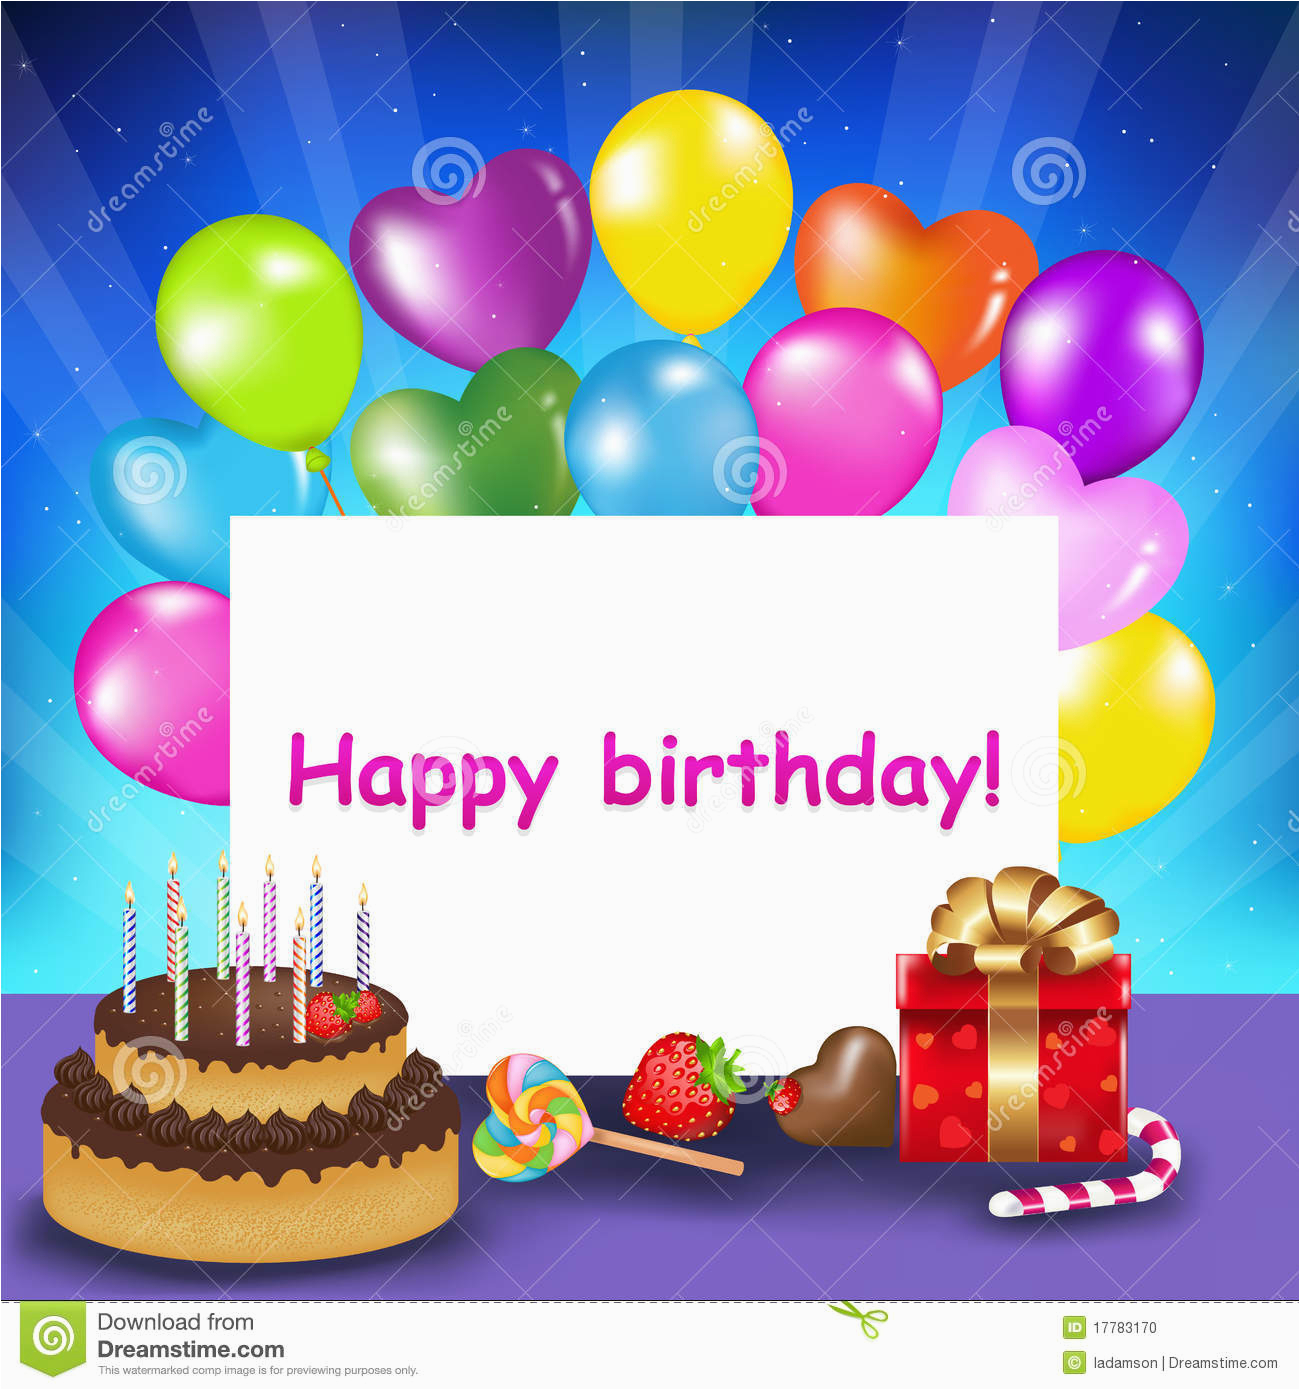 happy birthday cards online free inside ucwords